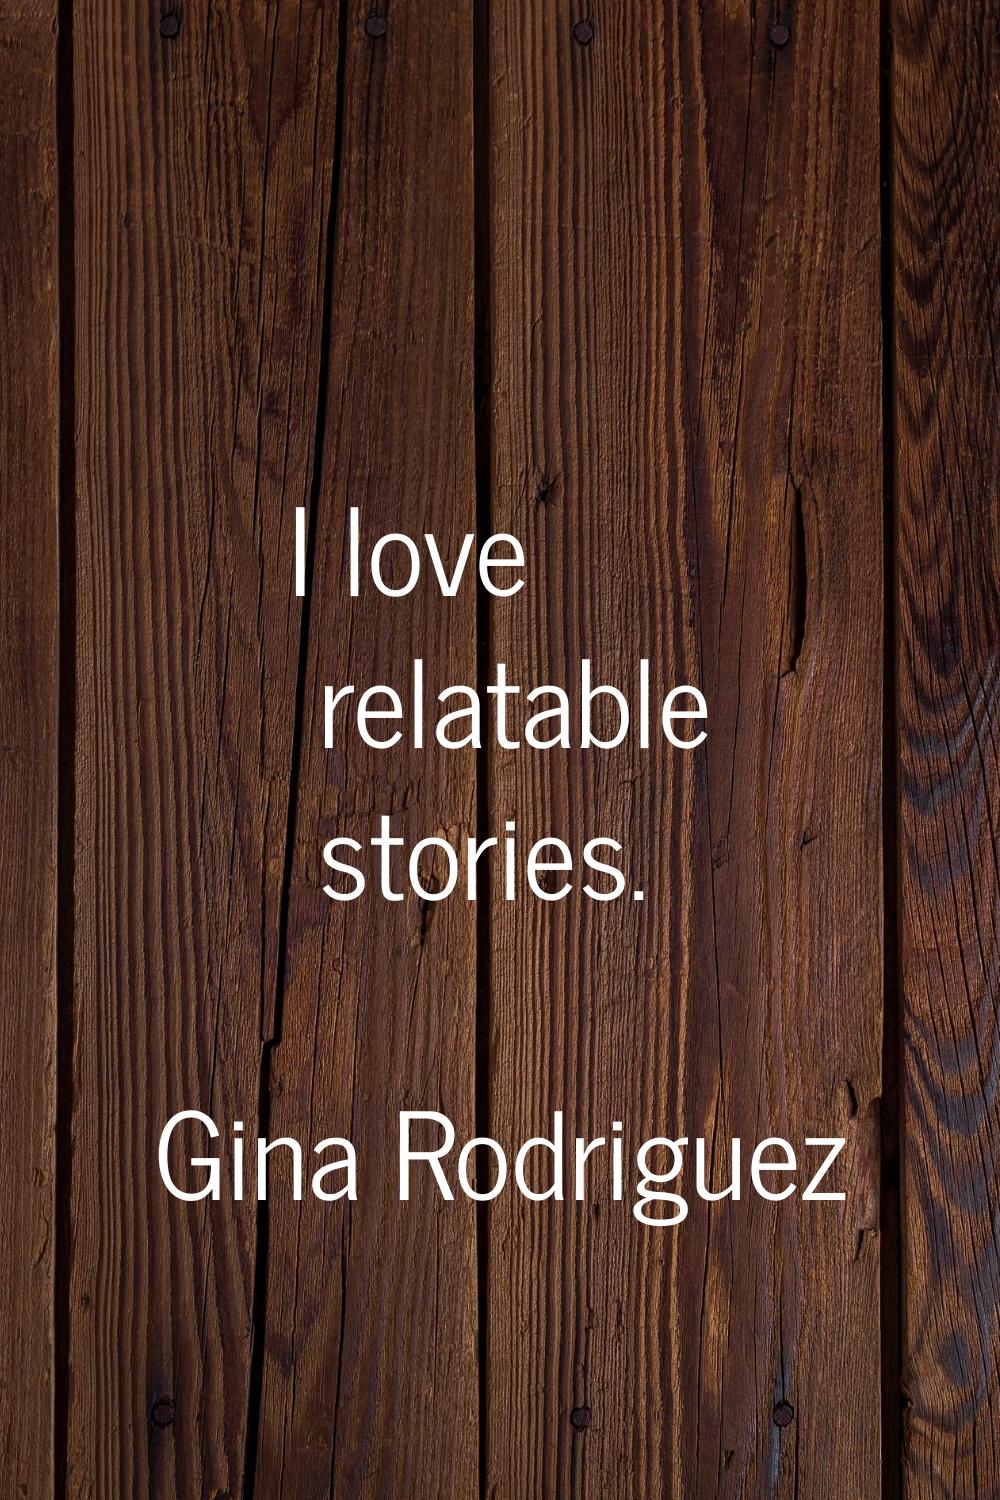 I love relatable stories.